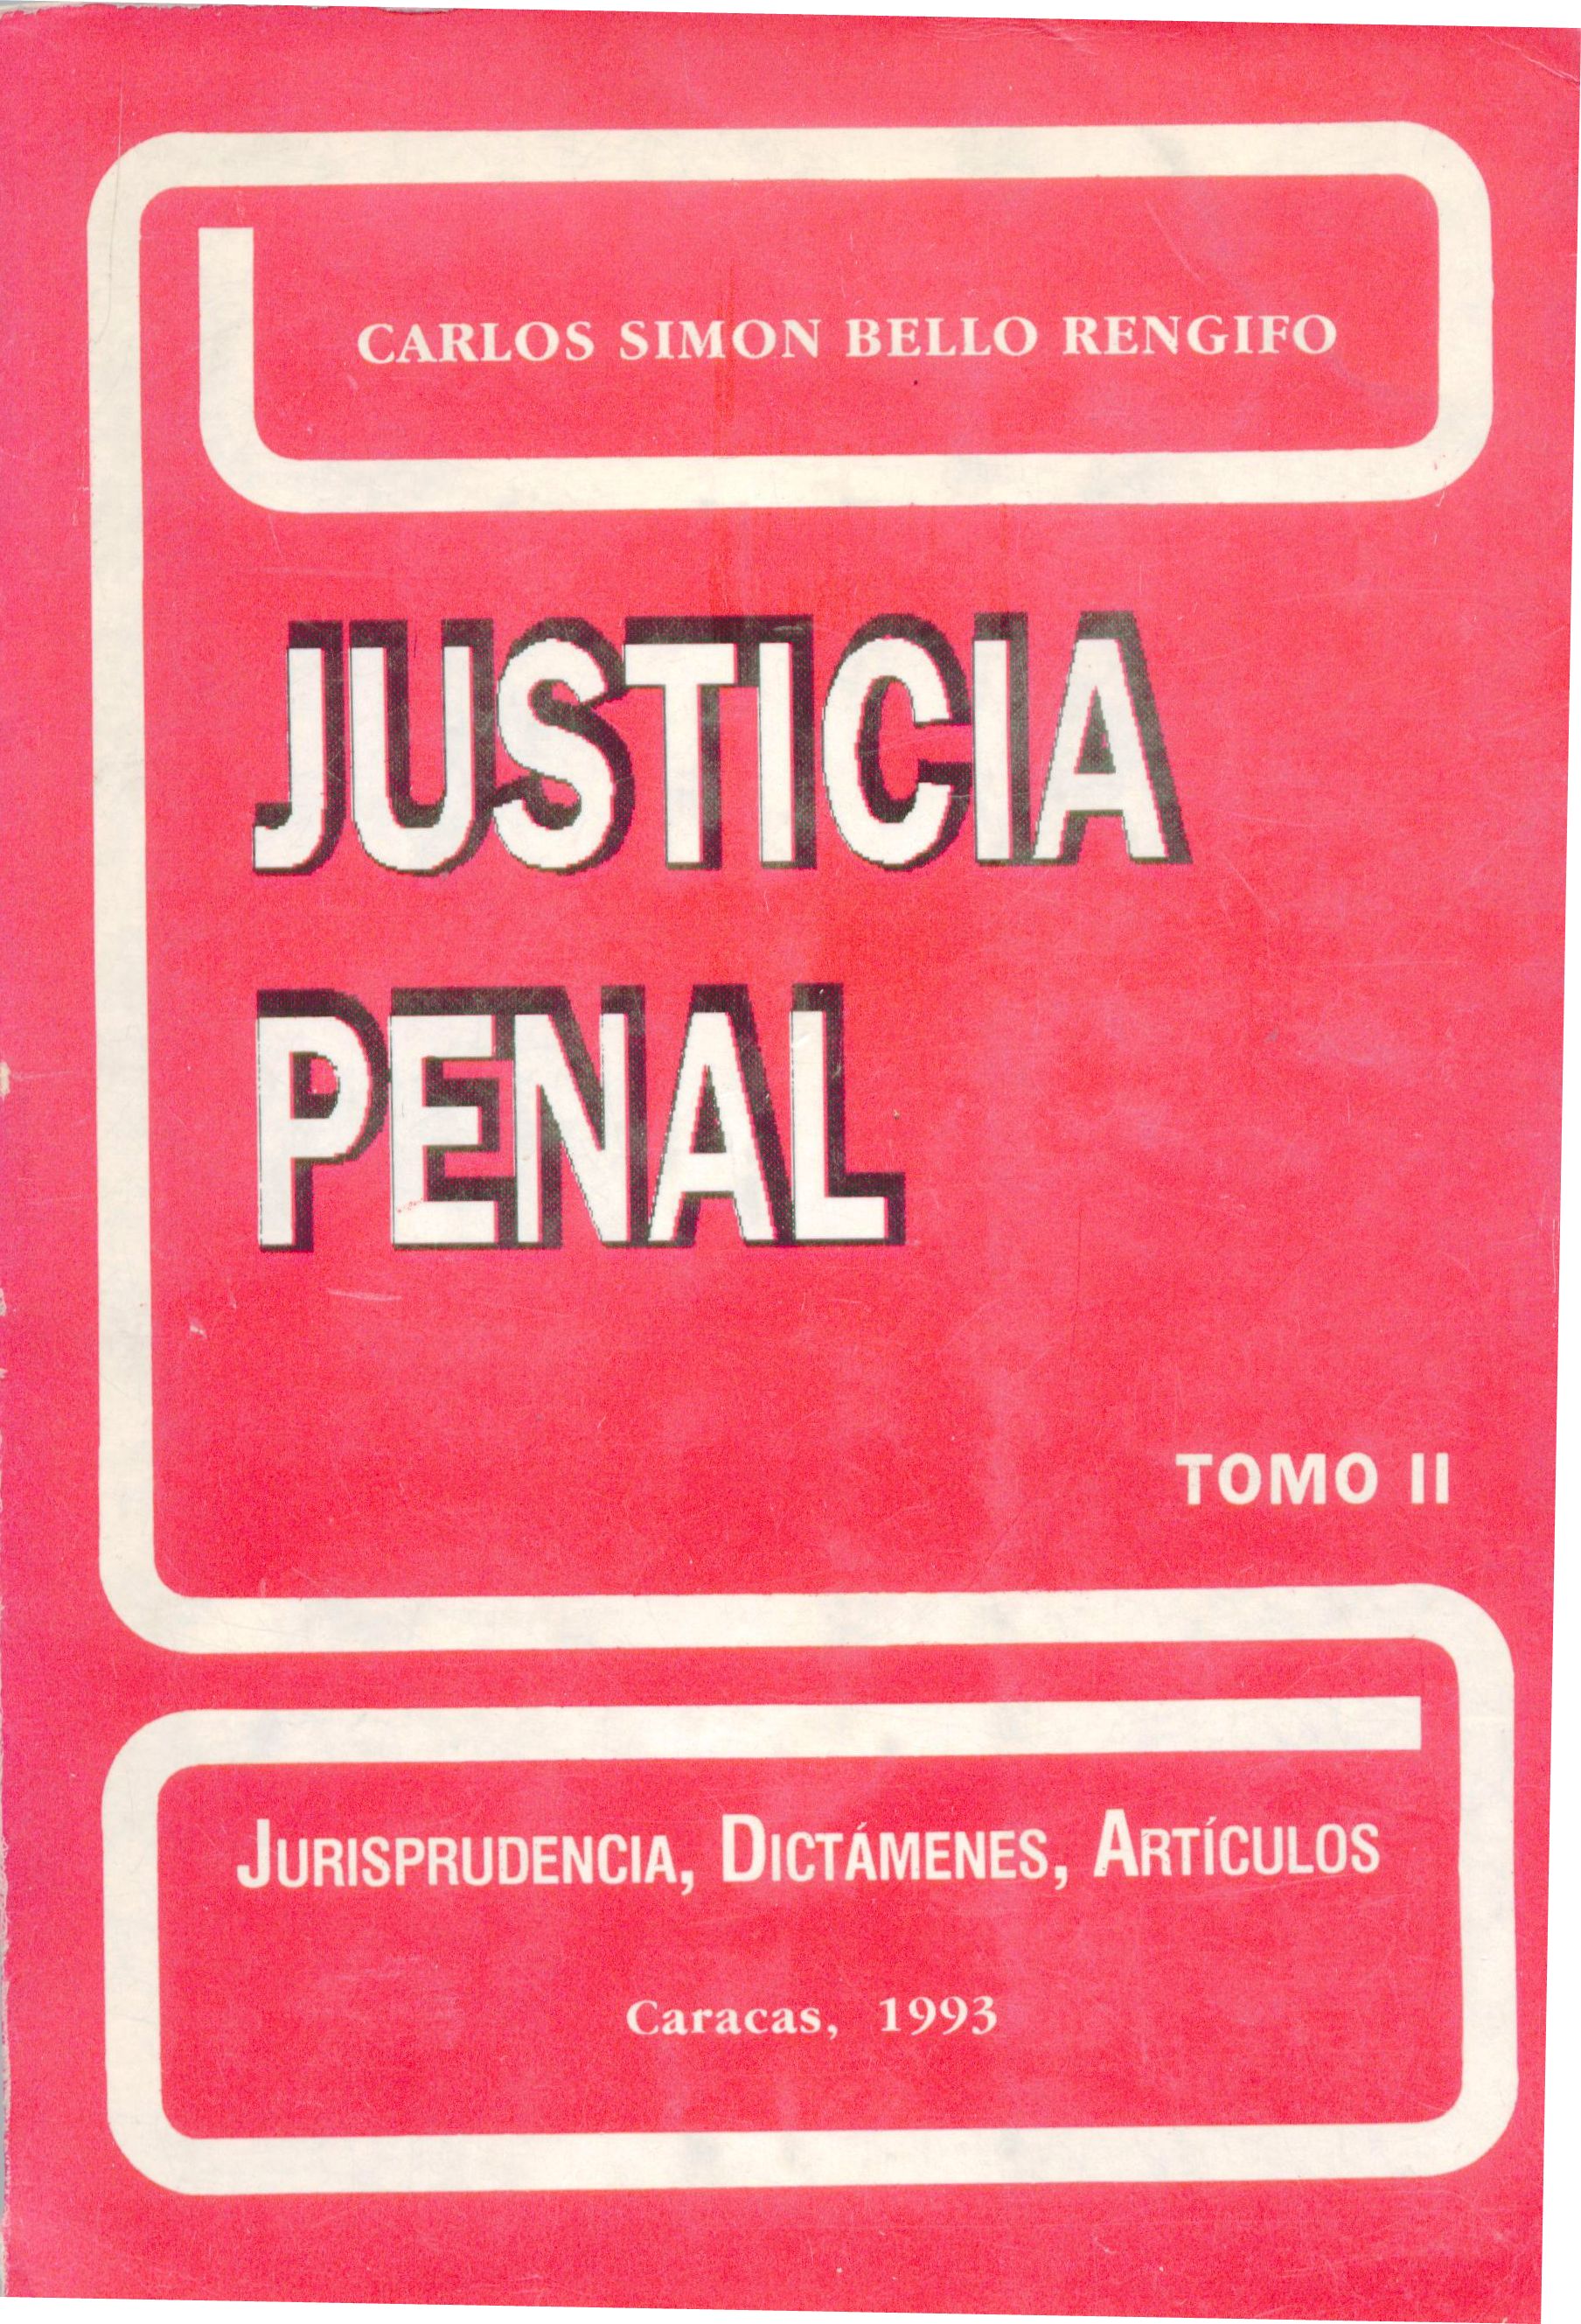 Justcia Penal_0003